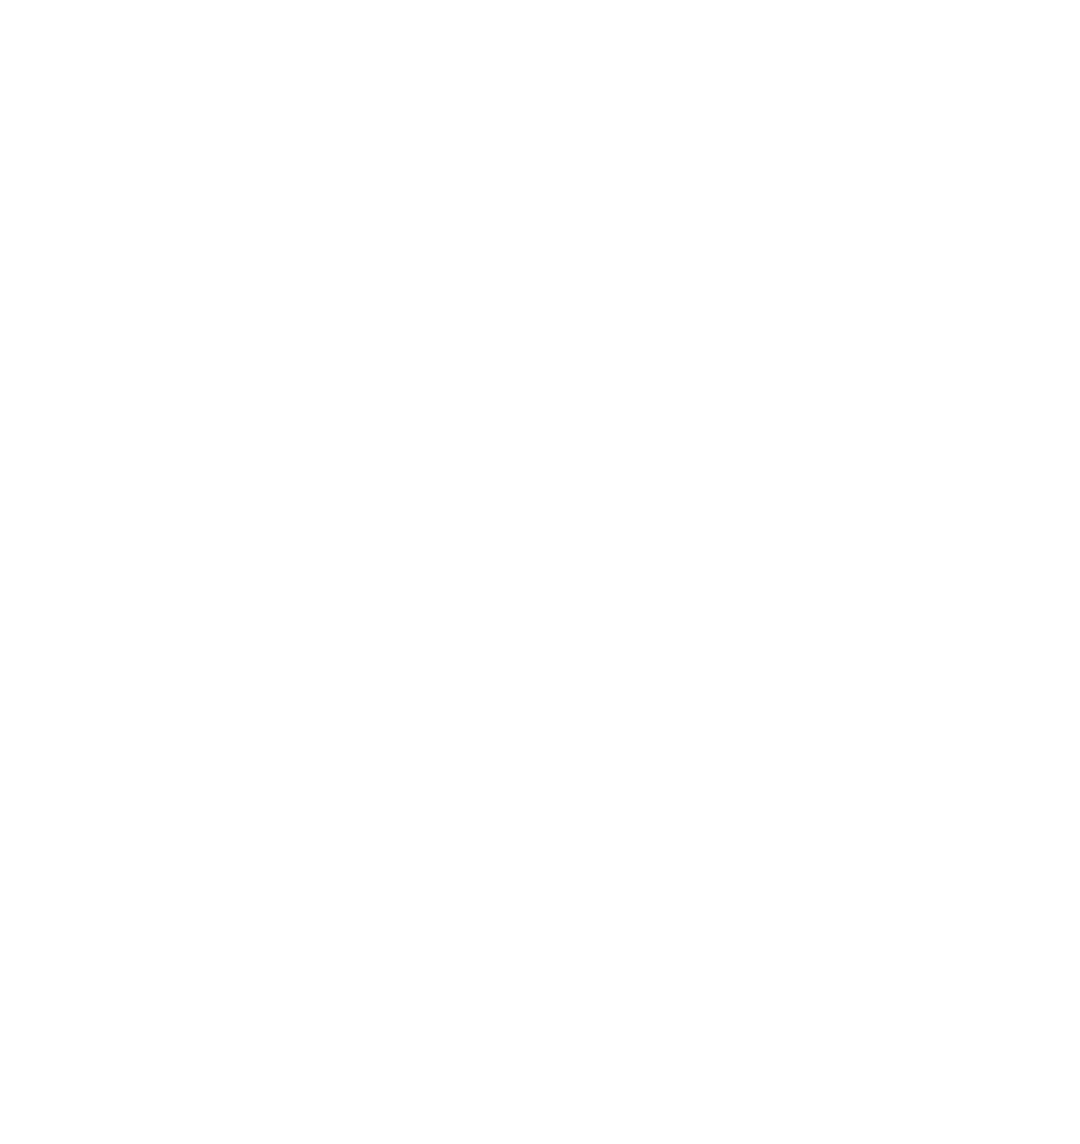 Mederick Platrerie Isolation Carrelage